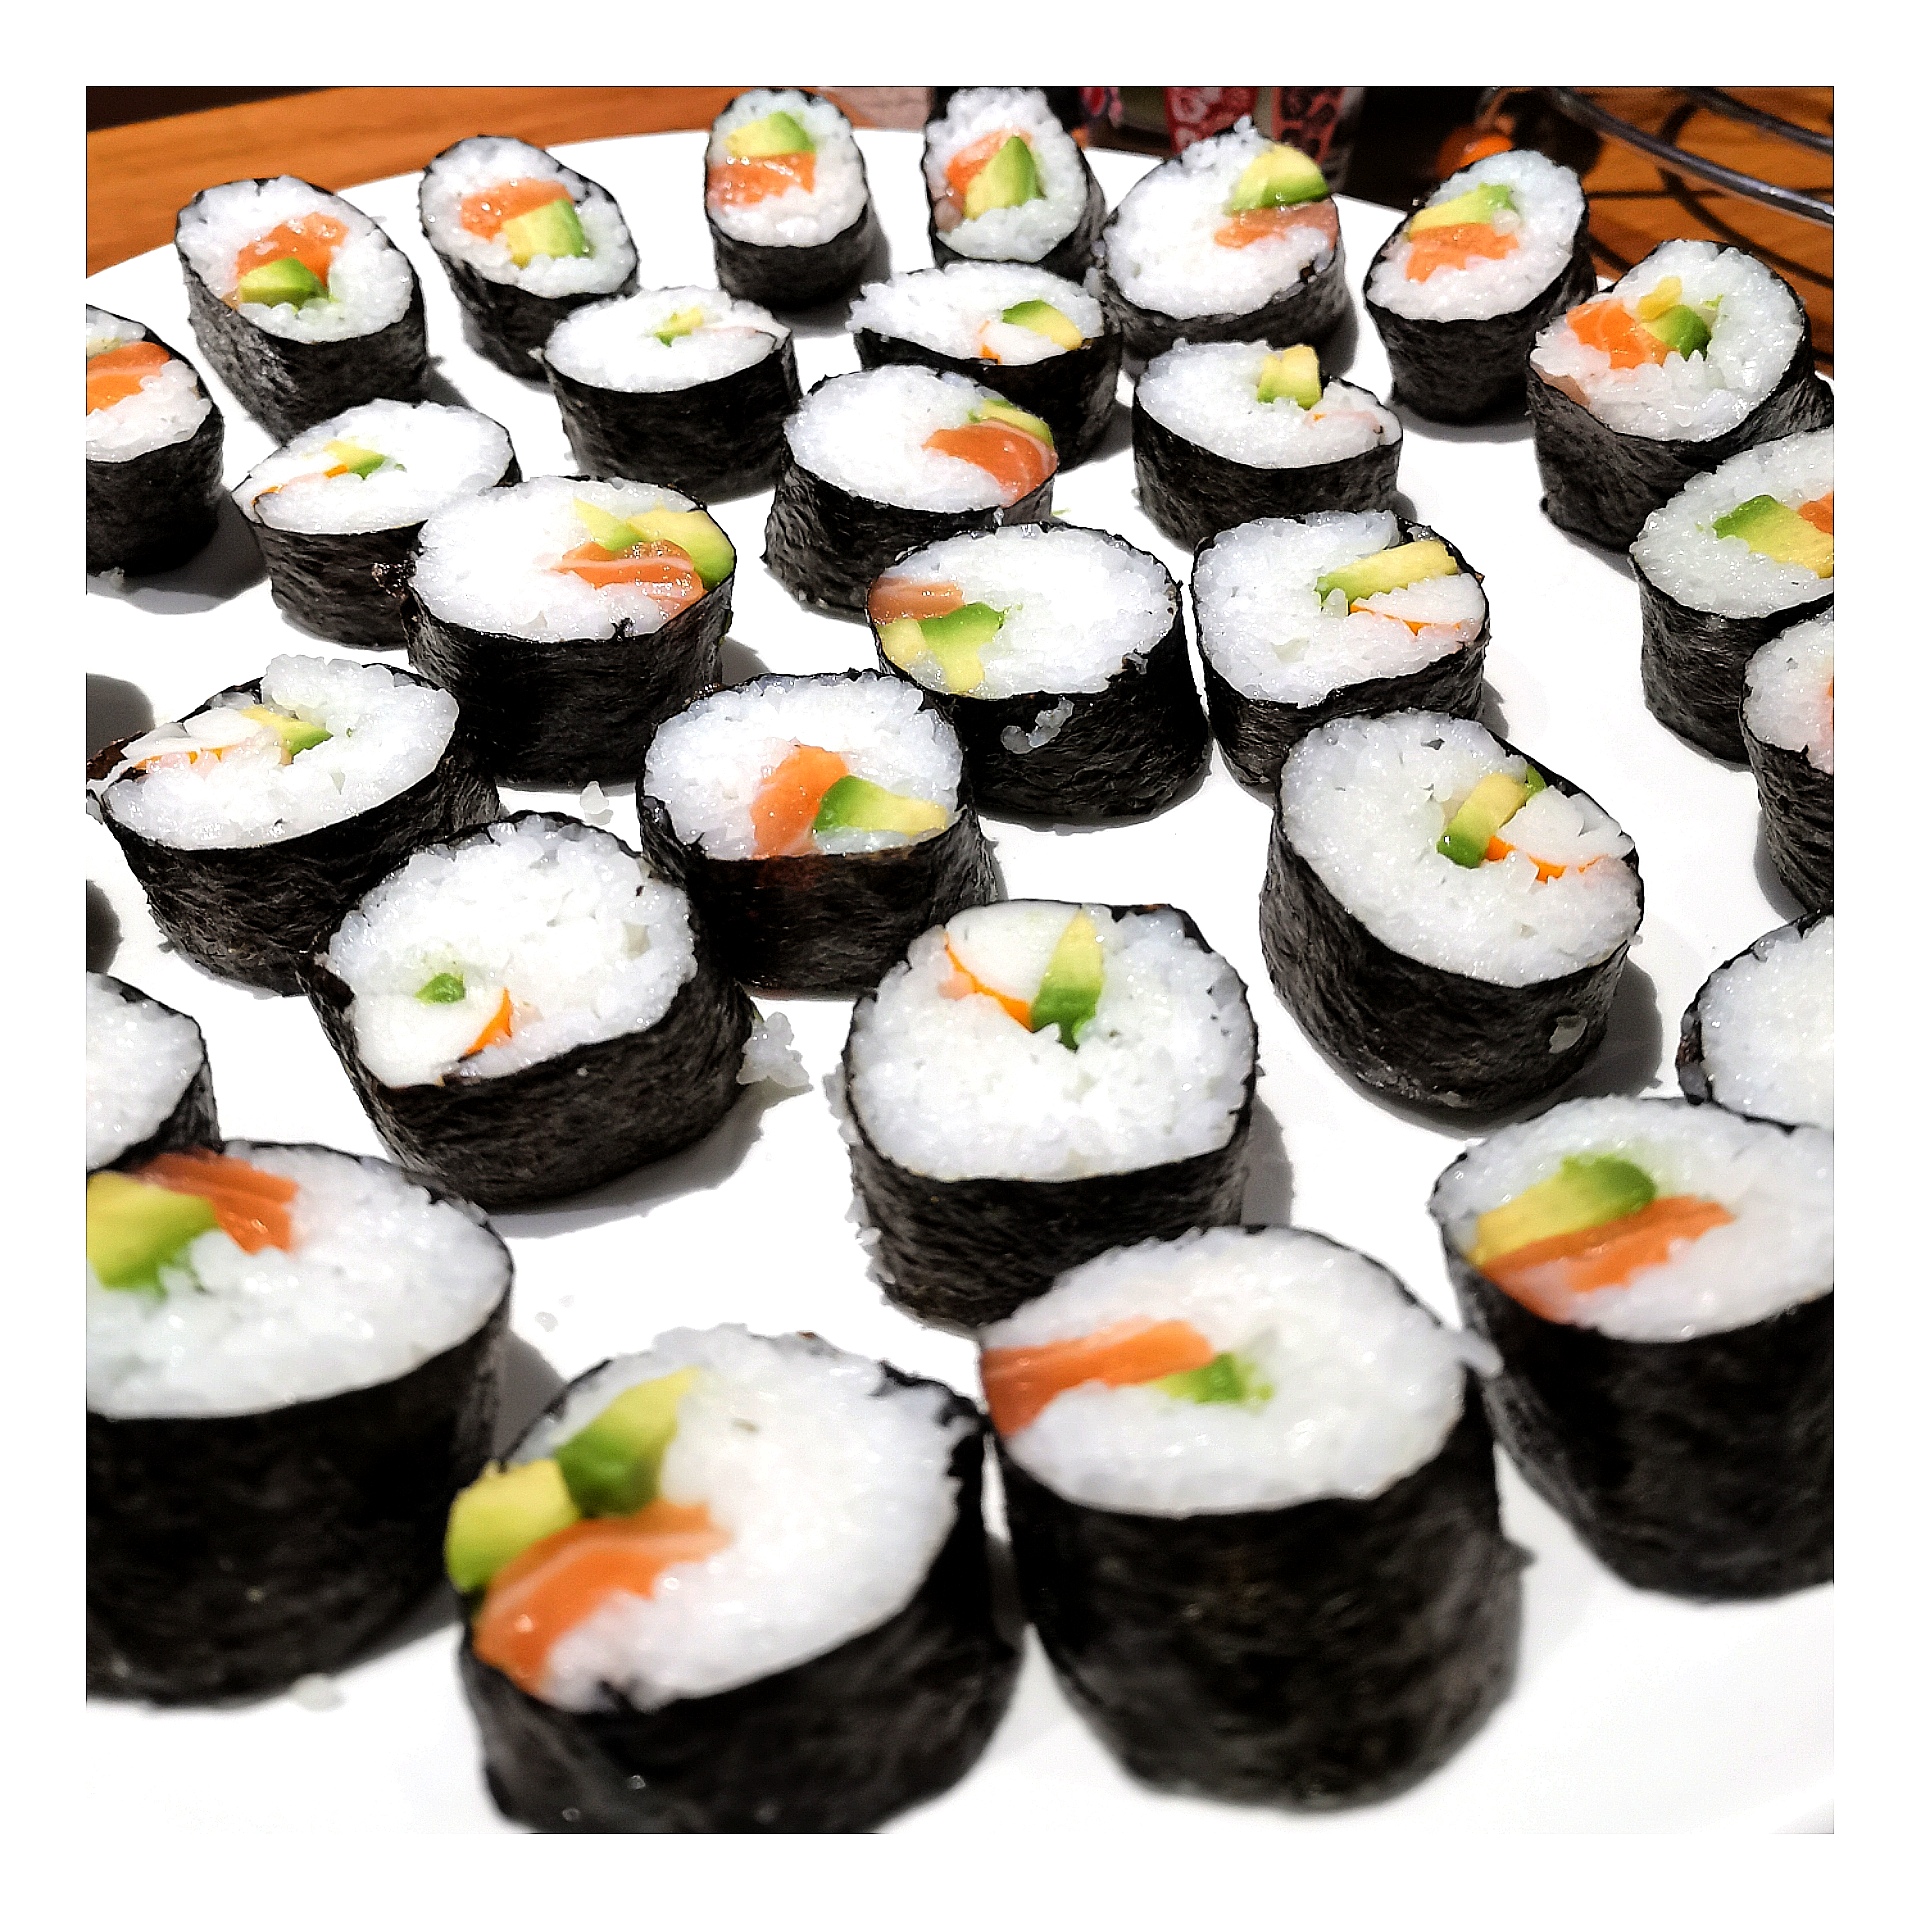 Riz à Sushi au micro-ondes - Popote de petit_bohnium